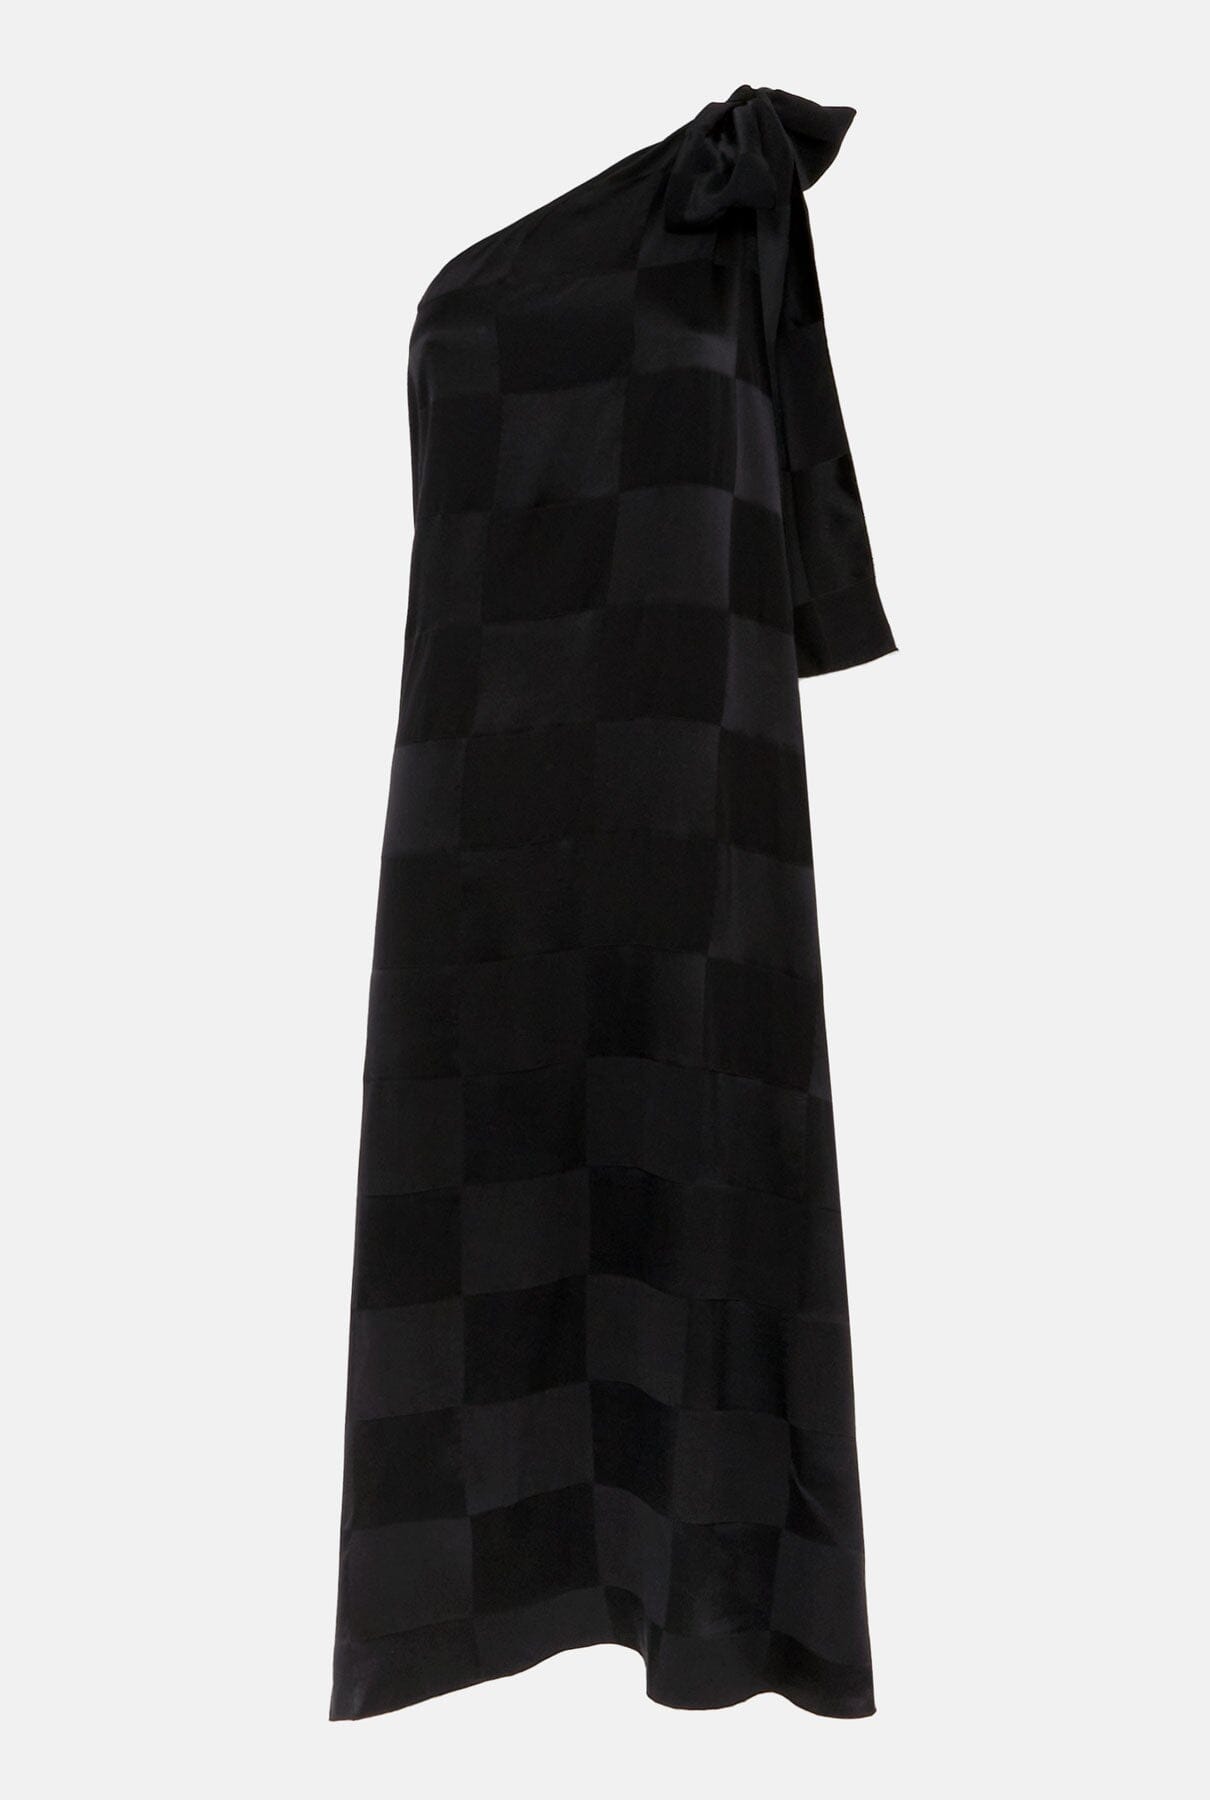 Juno dress black Dresses Atelier Aletheia 